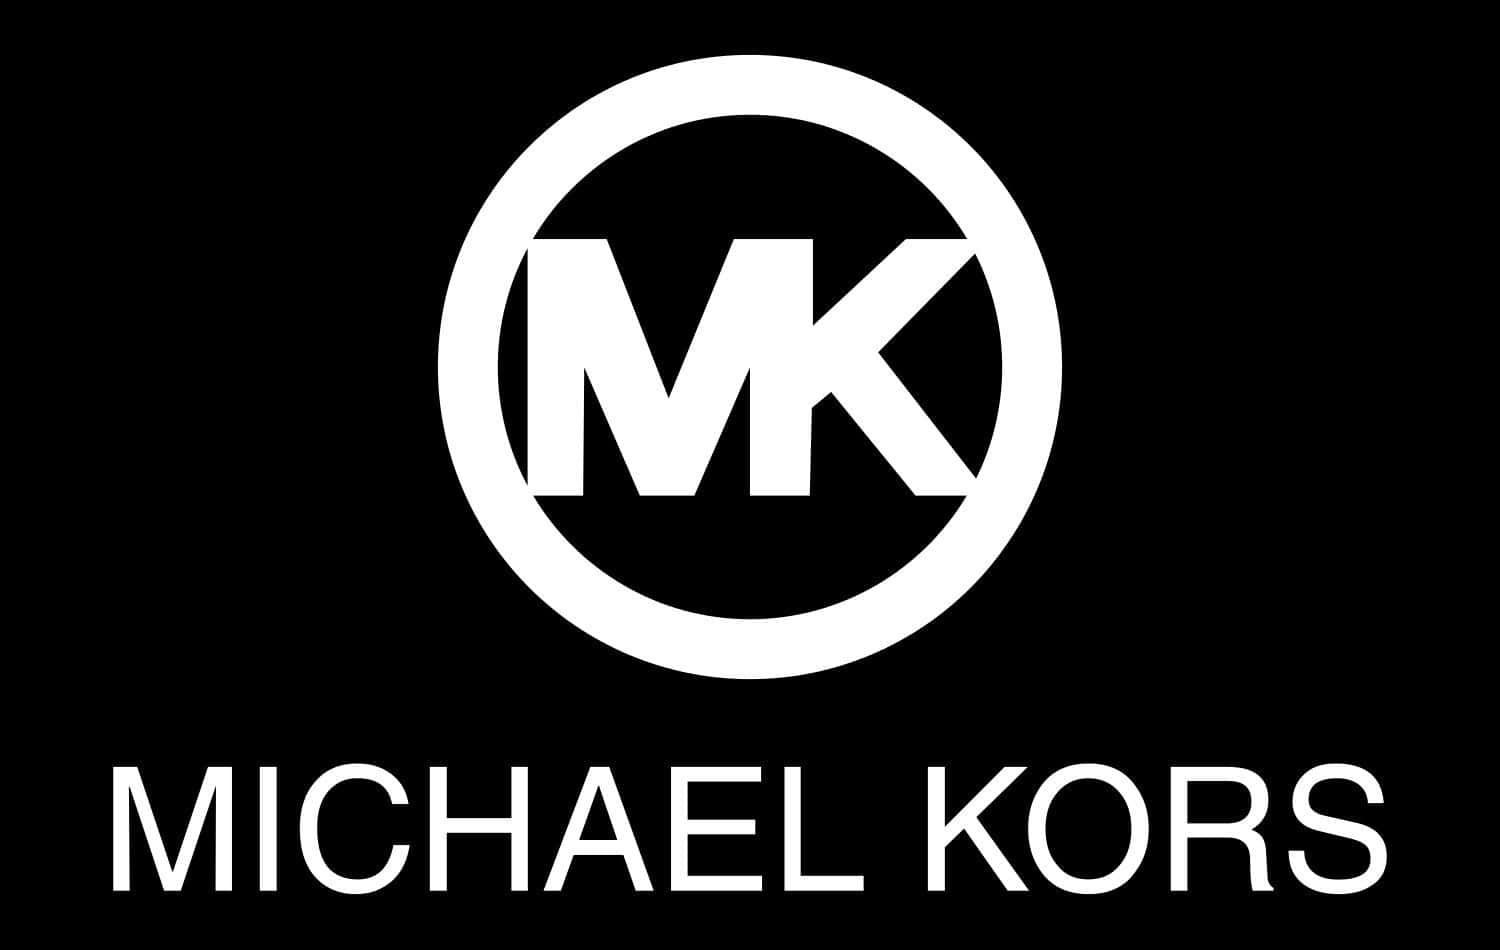 Download Michael Kors Logo On A Black Background | Wallpapers.com